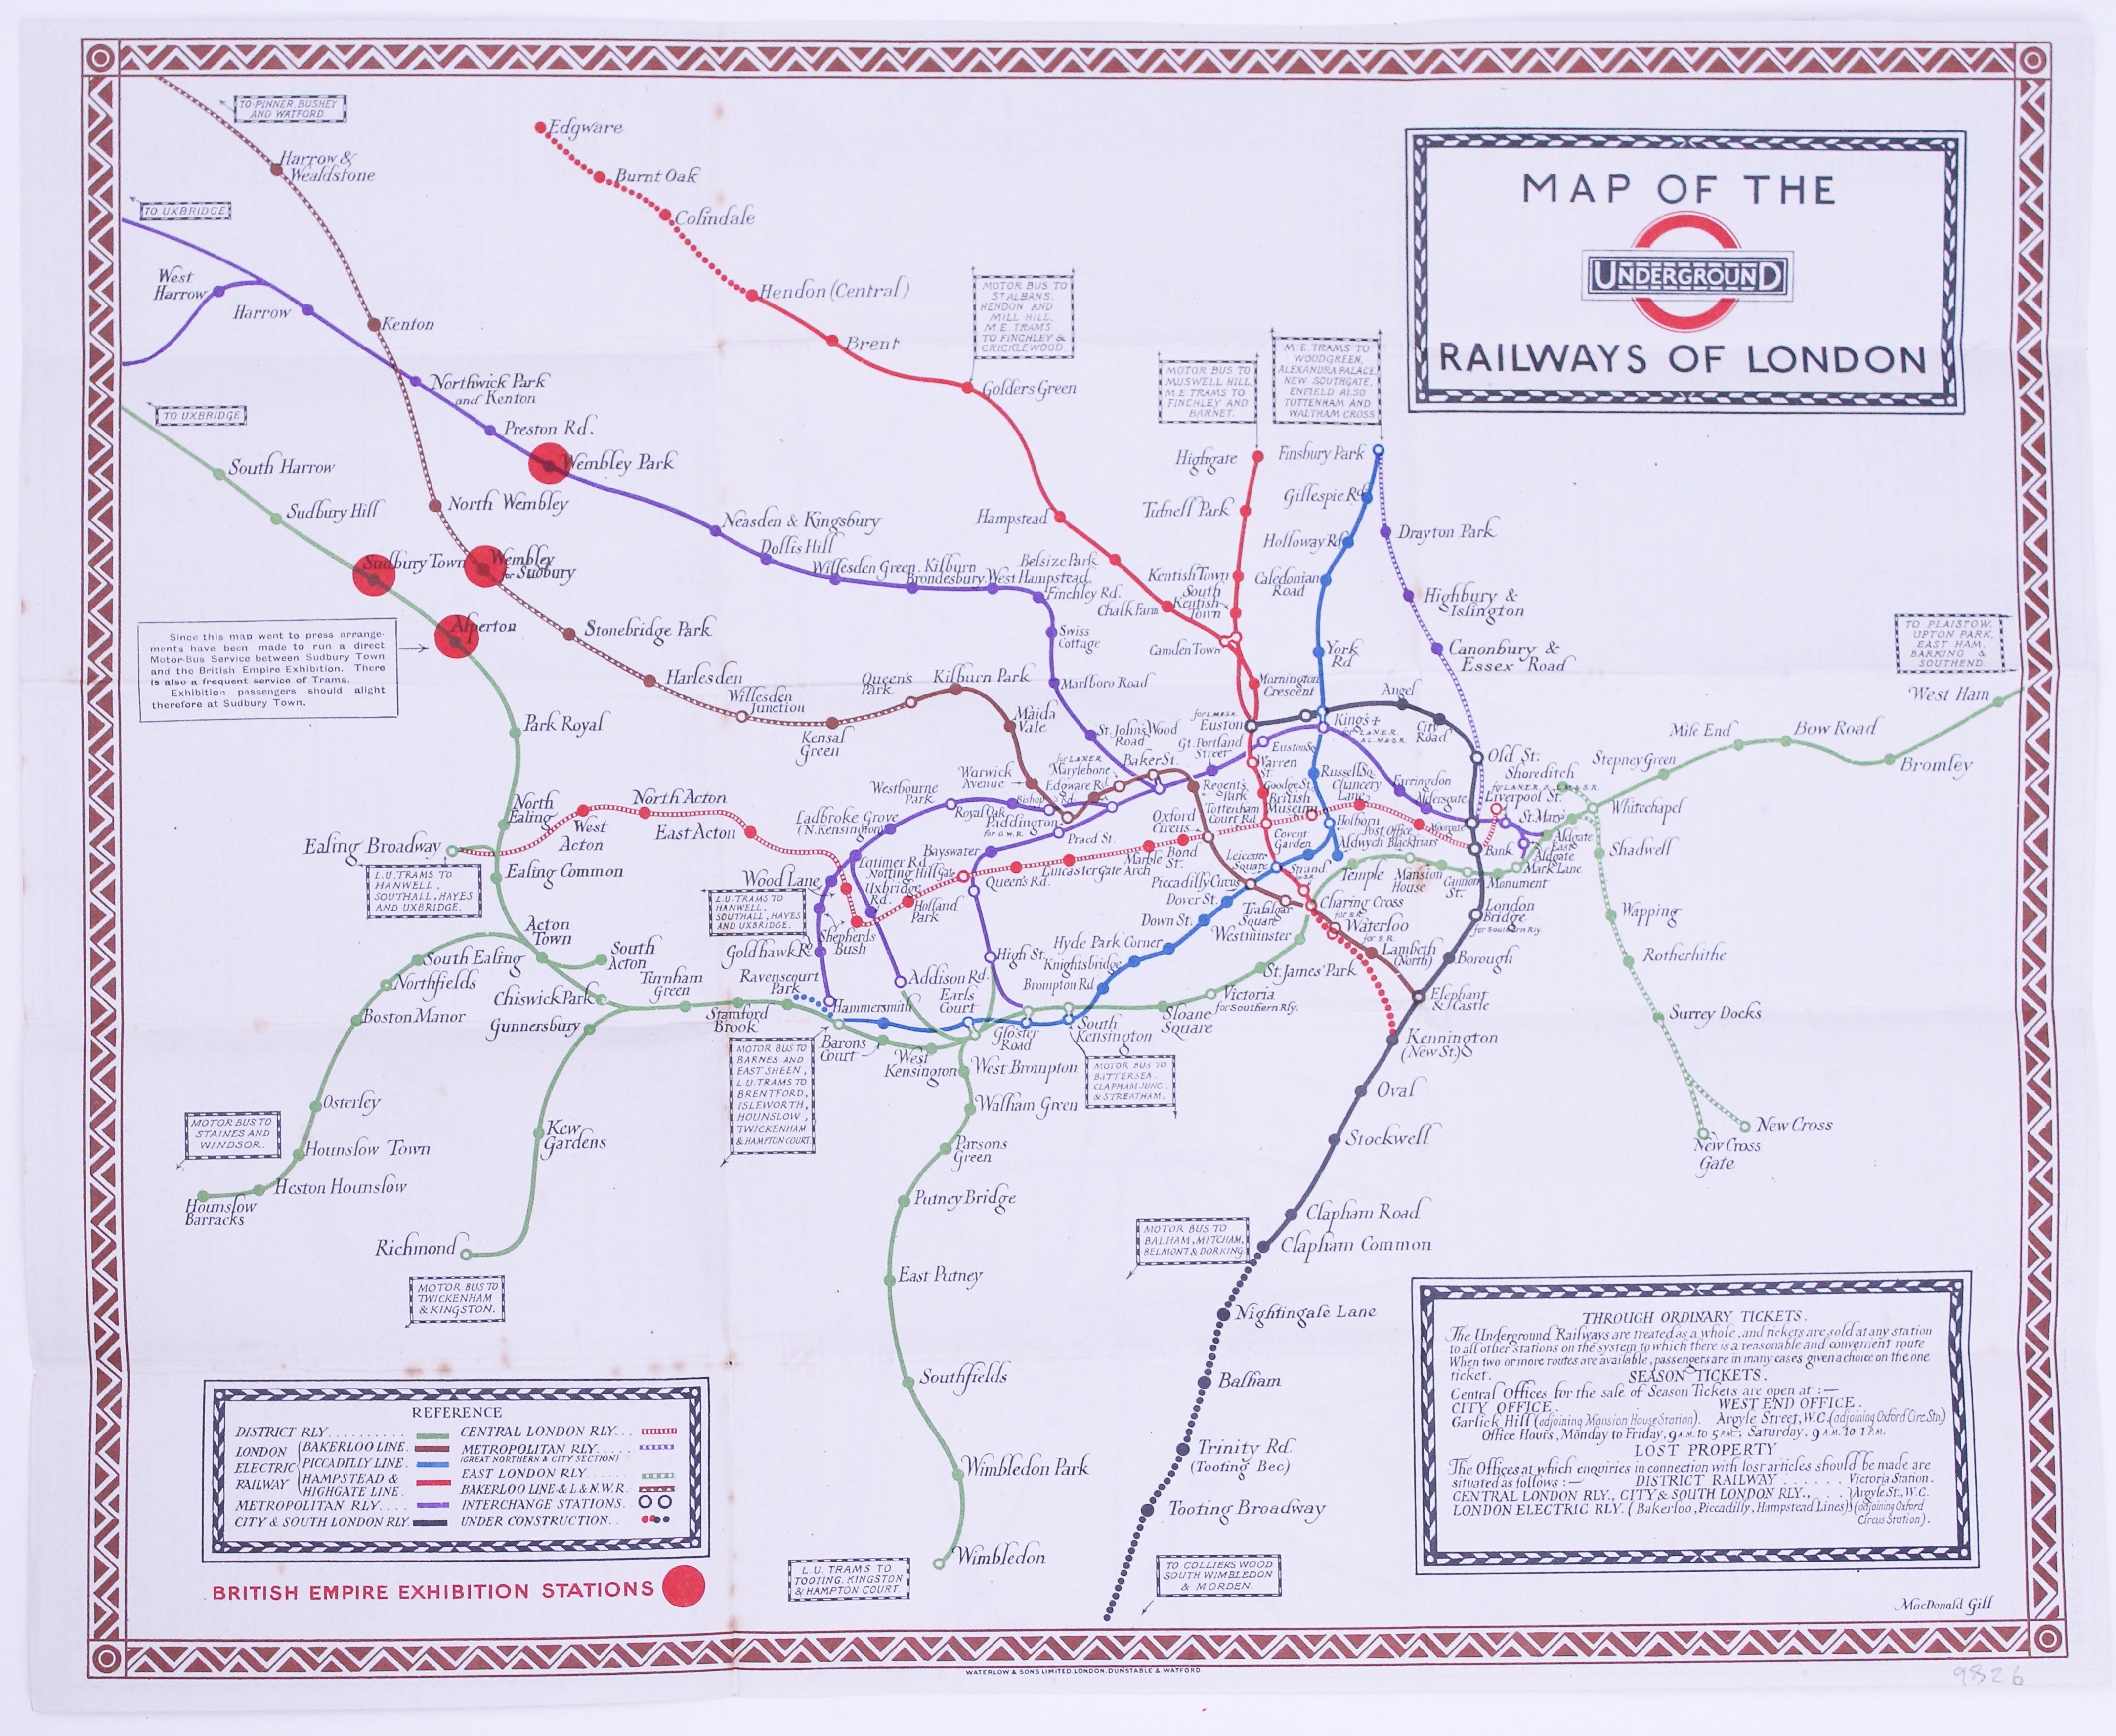 Gill's Larger Underground Passenger Map